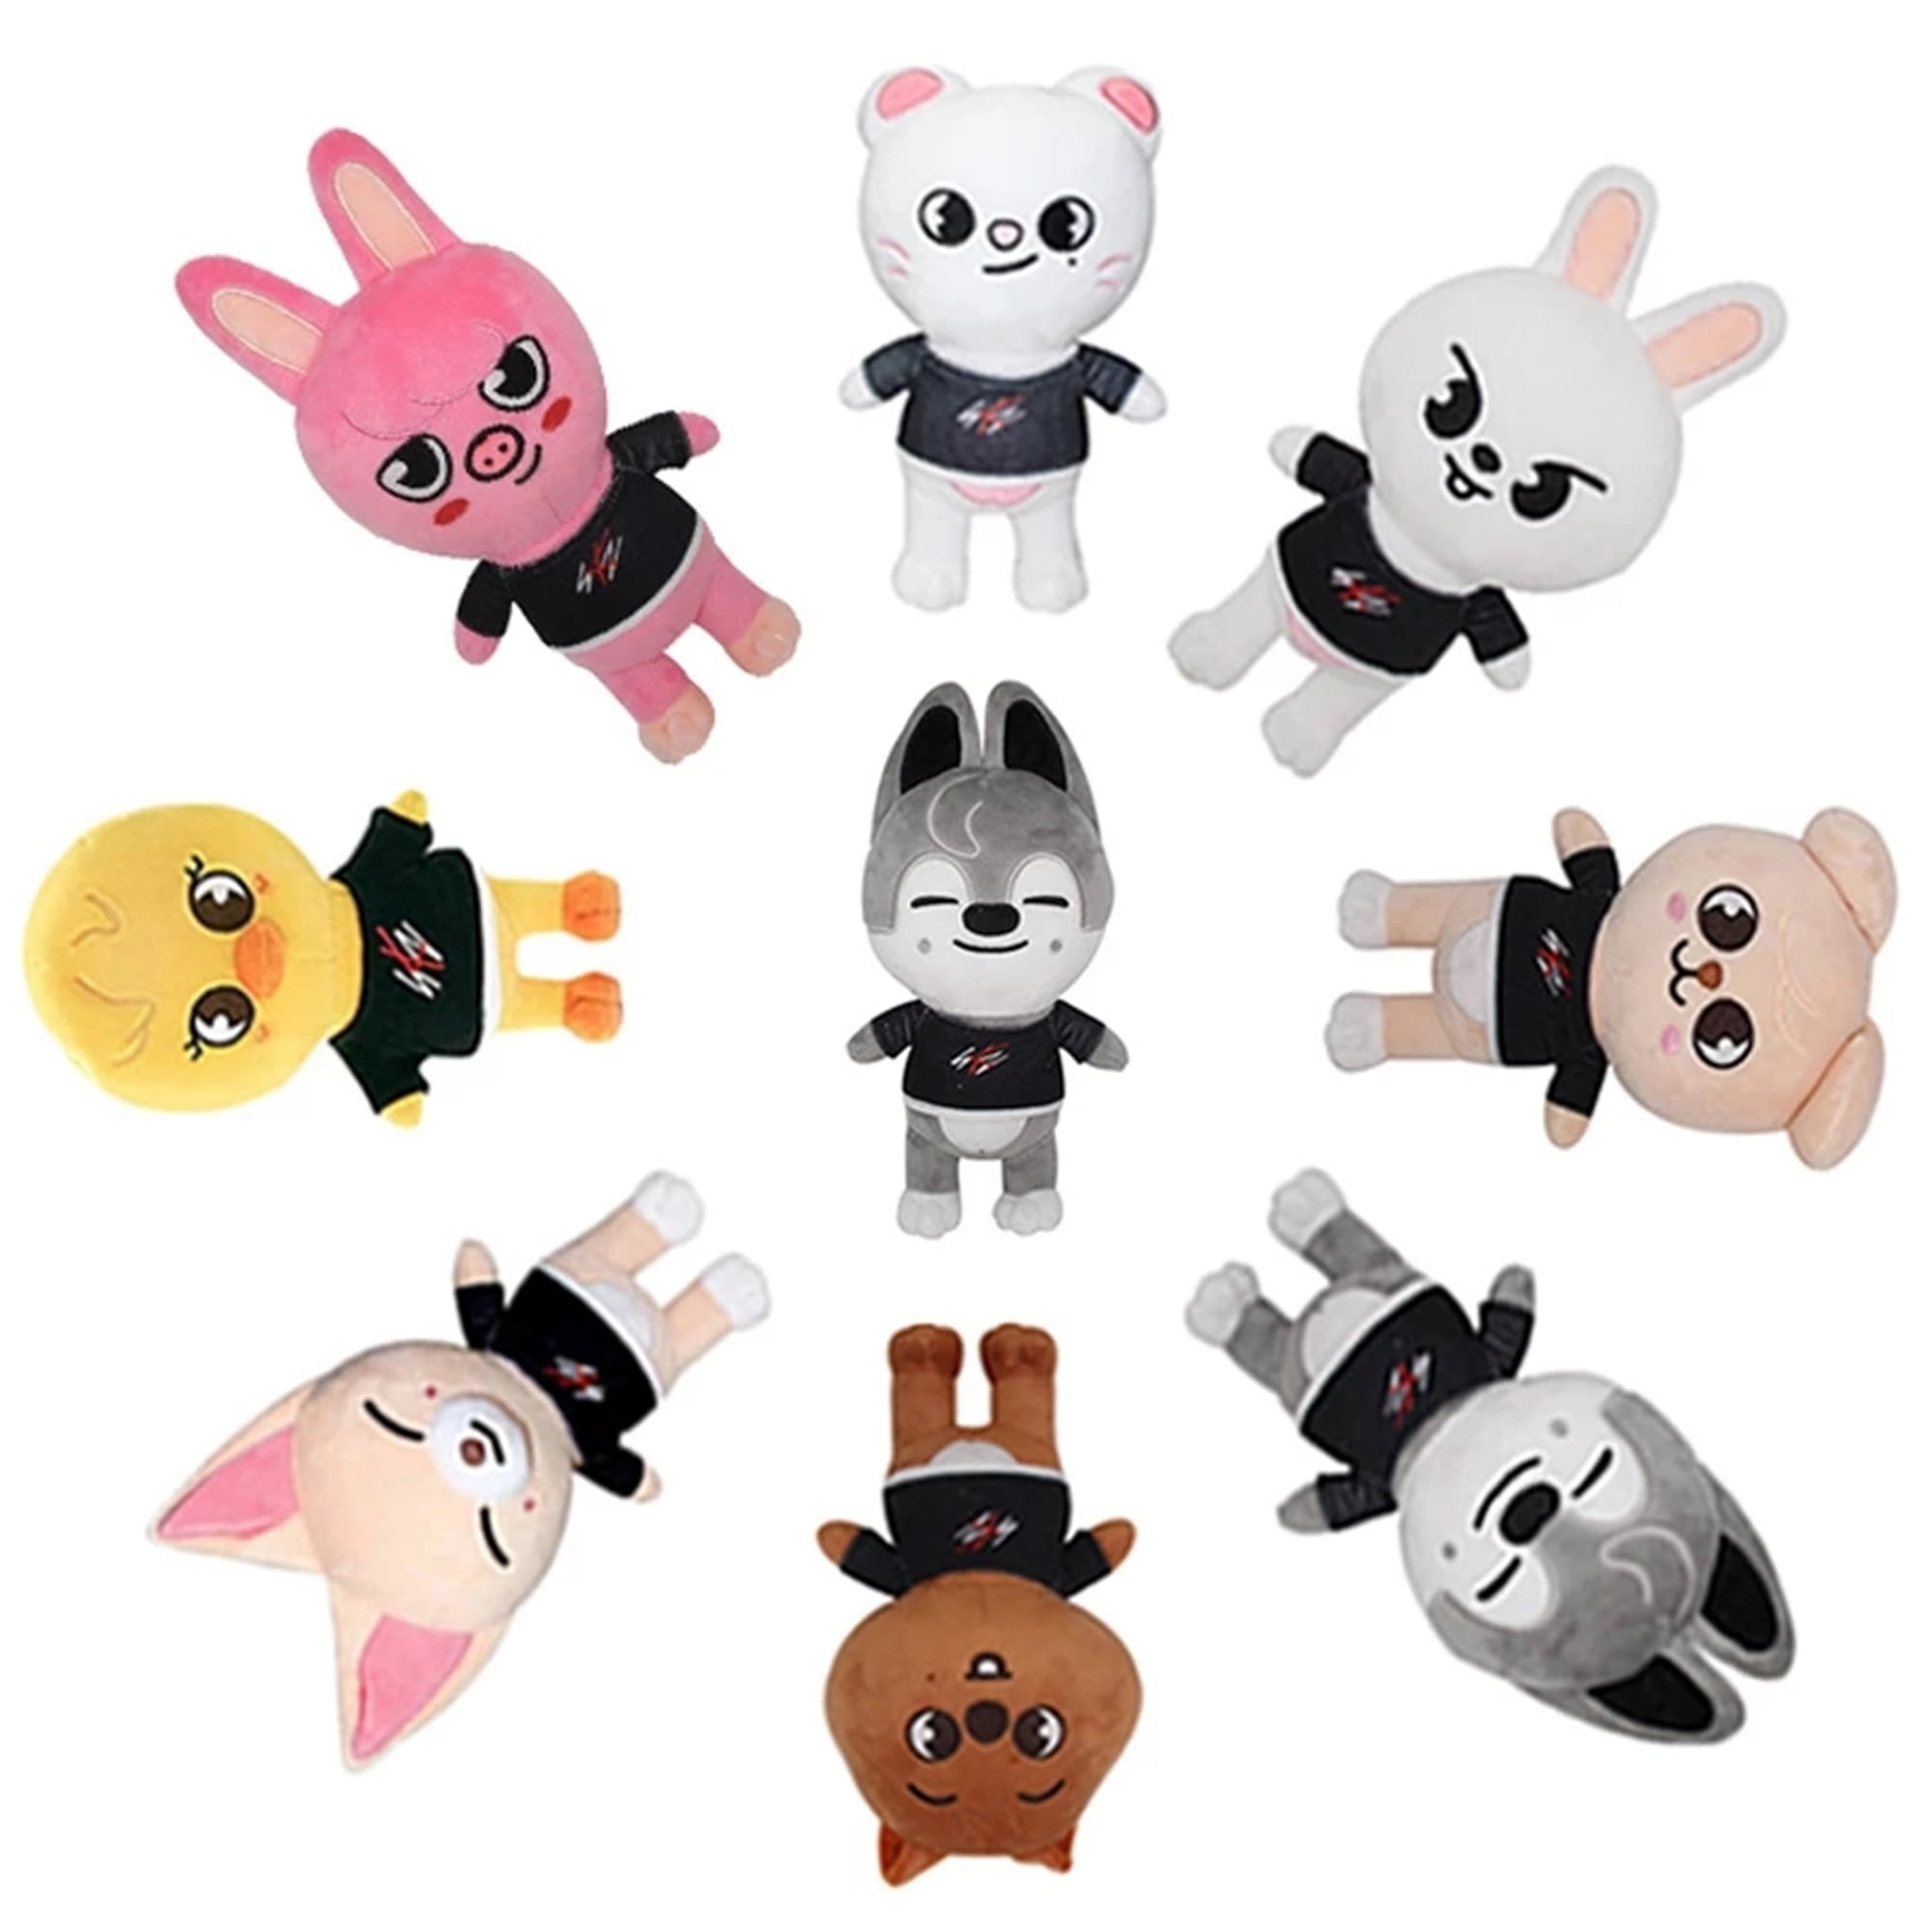 Skzoo Plush Toy - Stray Kids Plush Doll for Kids Fans (1PC)